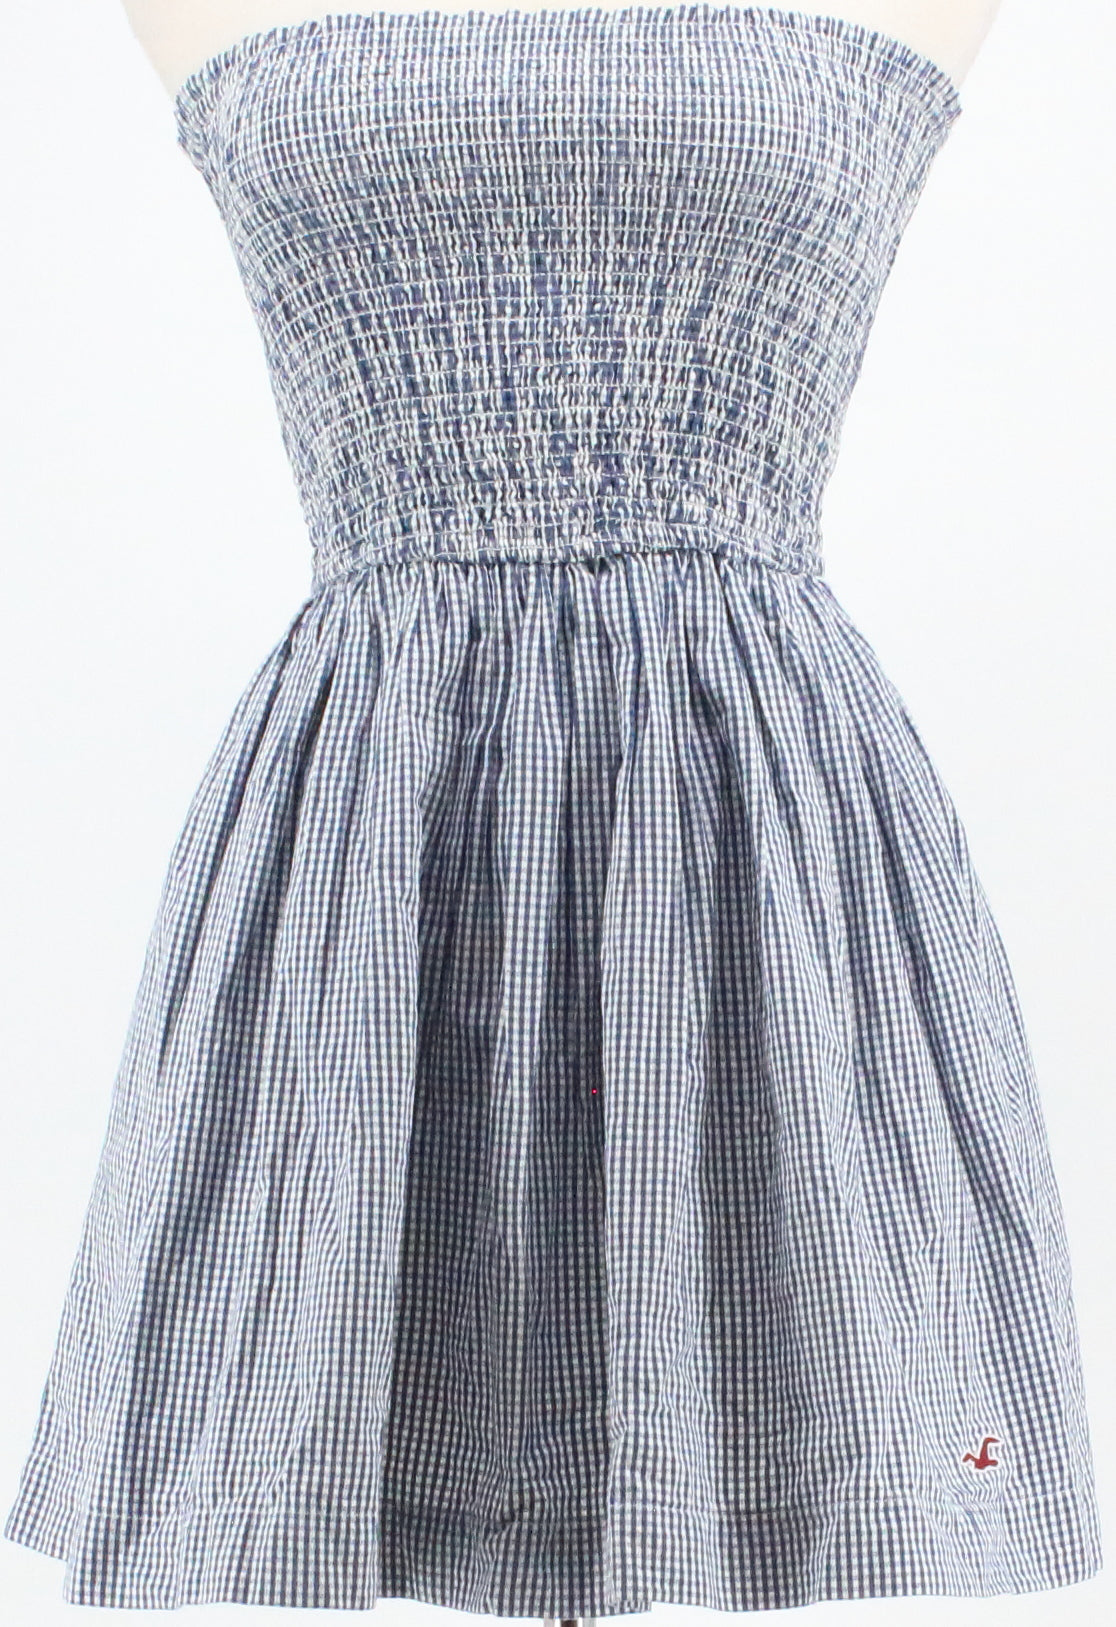 Hollister Blue and White Gingham Strapless Mini Dress